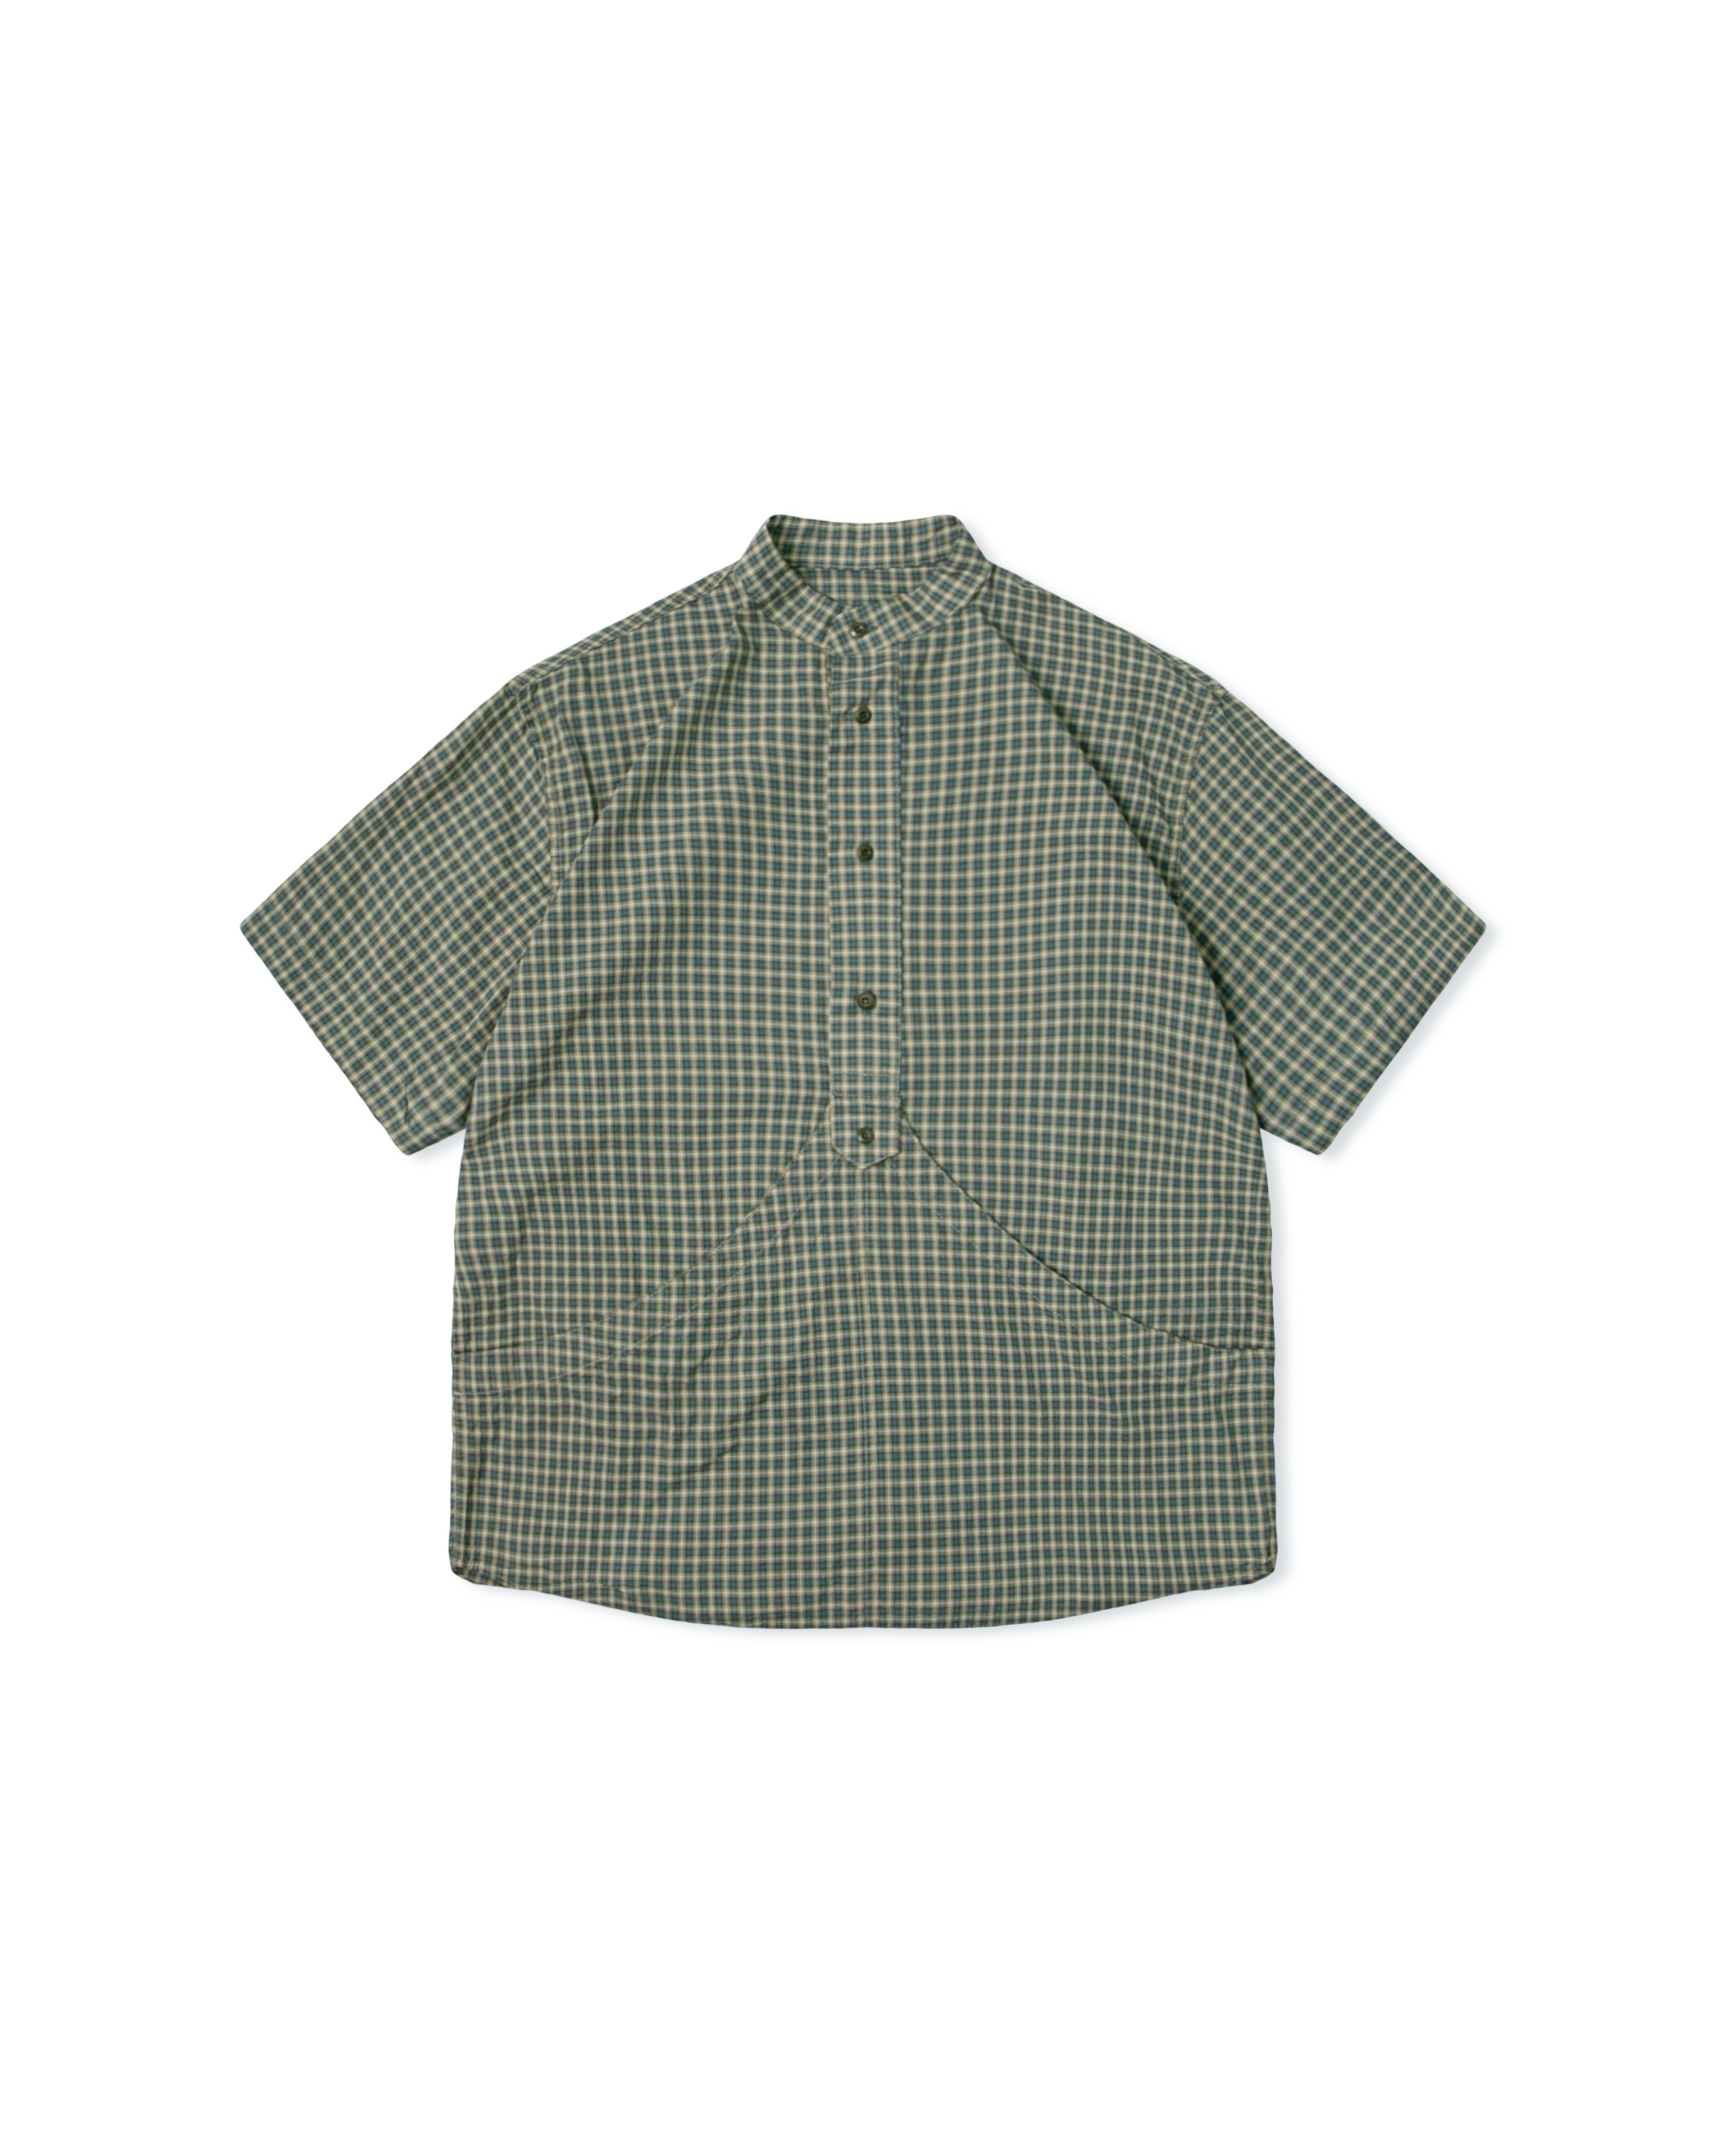 Big Pocket Anorak Check Half Shirt - Green